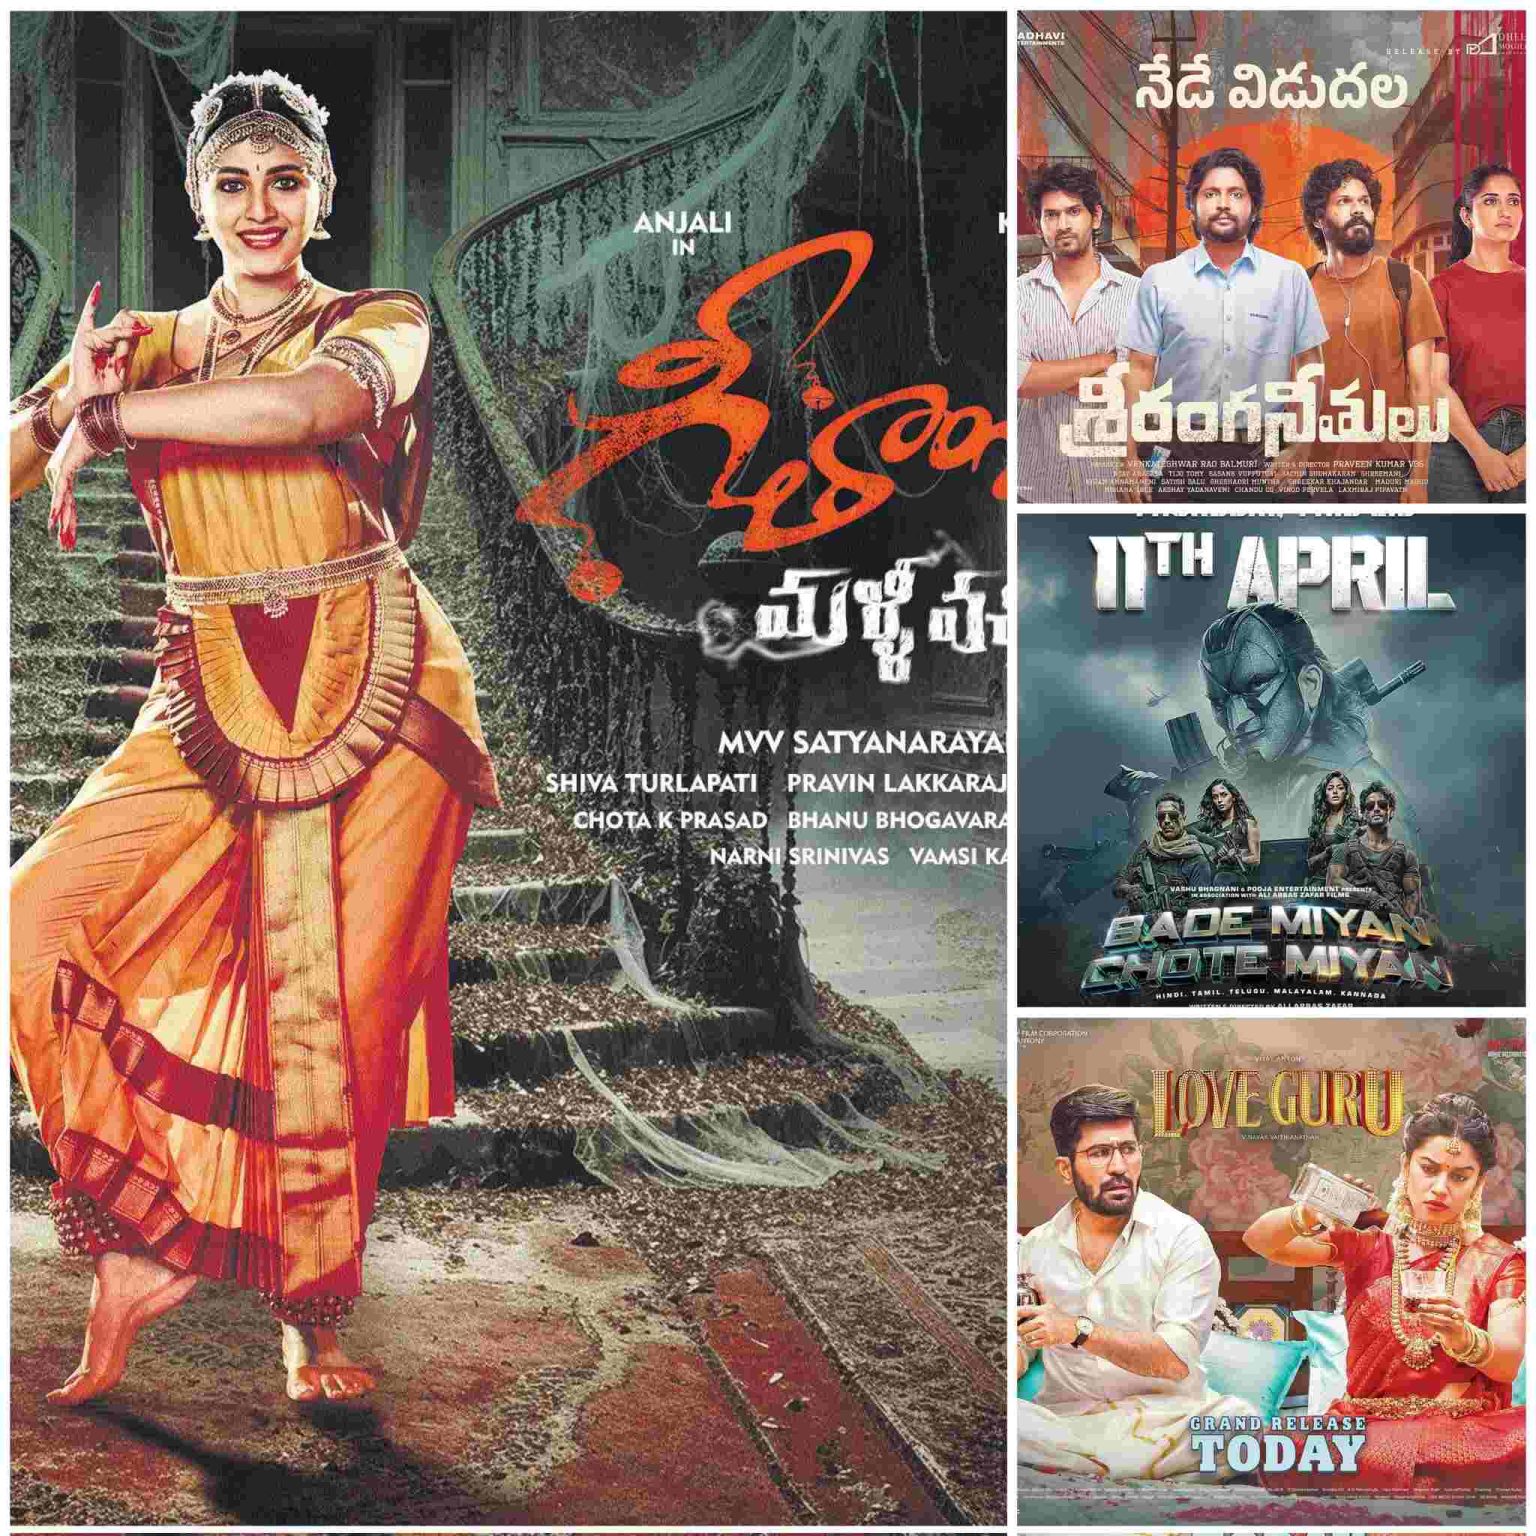 Telugu Movie Releases: April 11th, 2024 - Geethanjali Malli Vachindi, Sri Ranga Neethulu, Bade Miyan Chote Miyan and Love Guru,Telugu